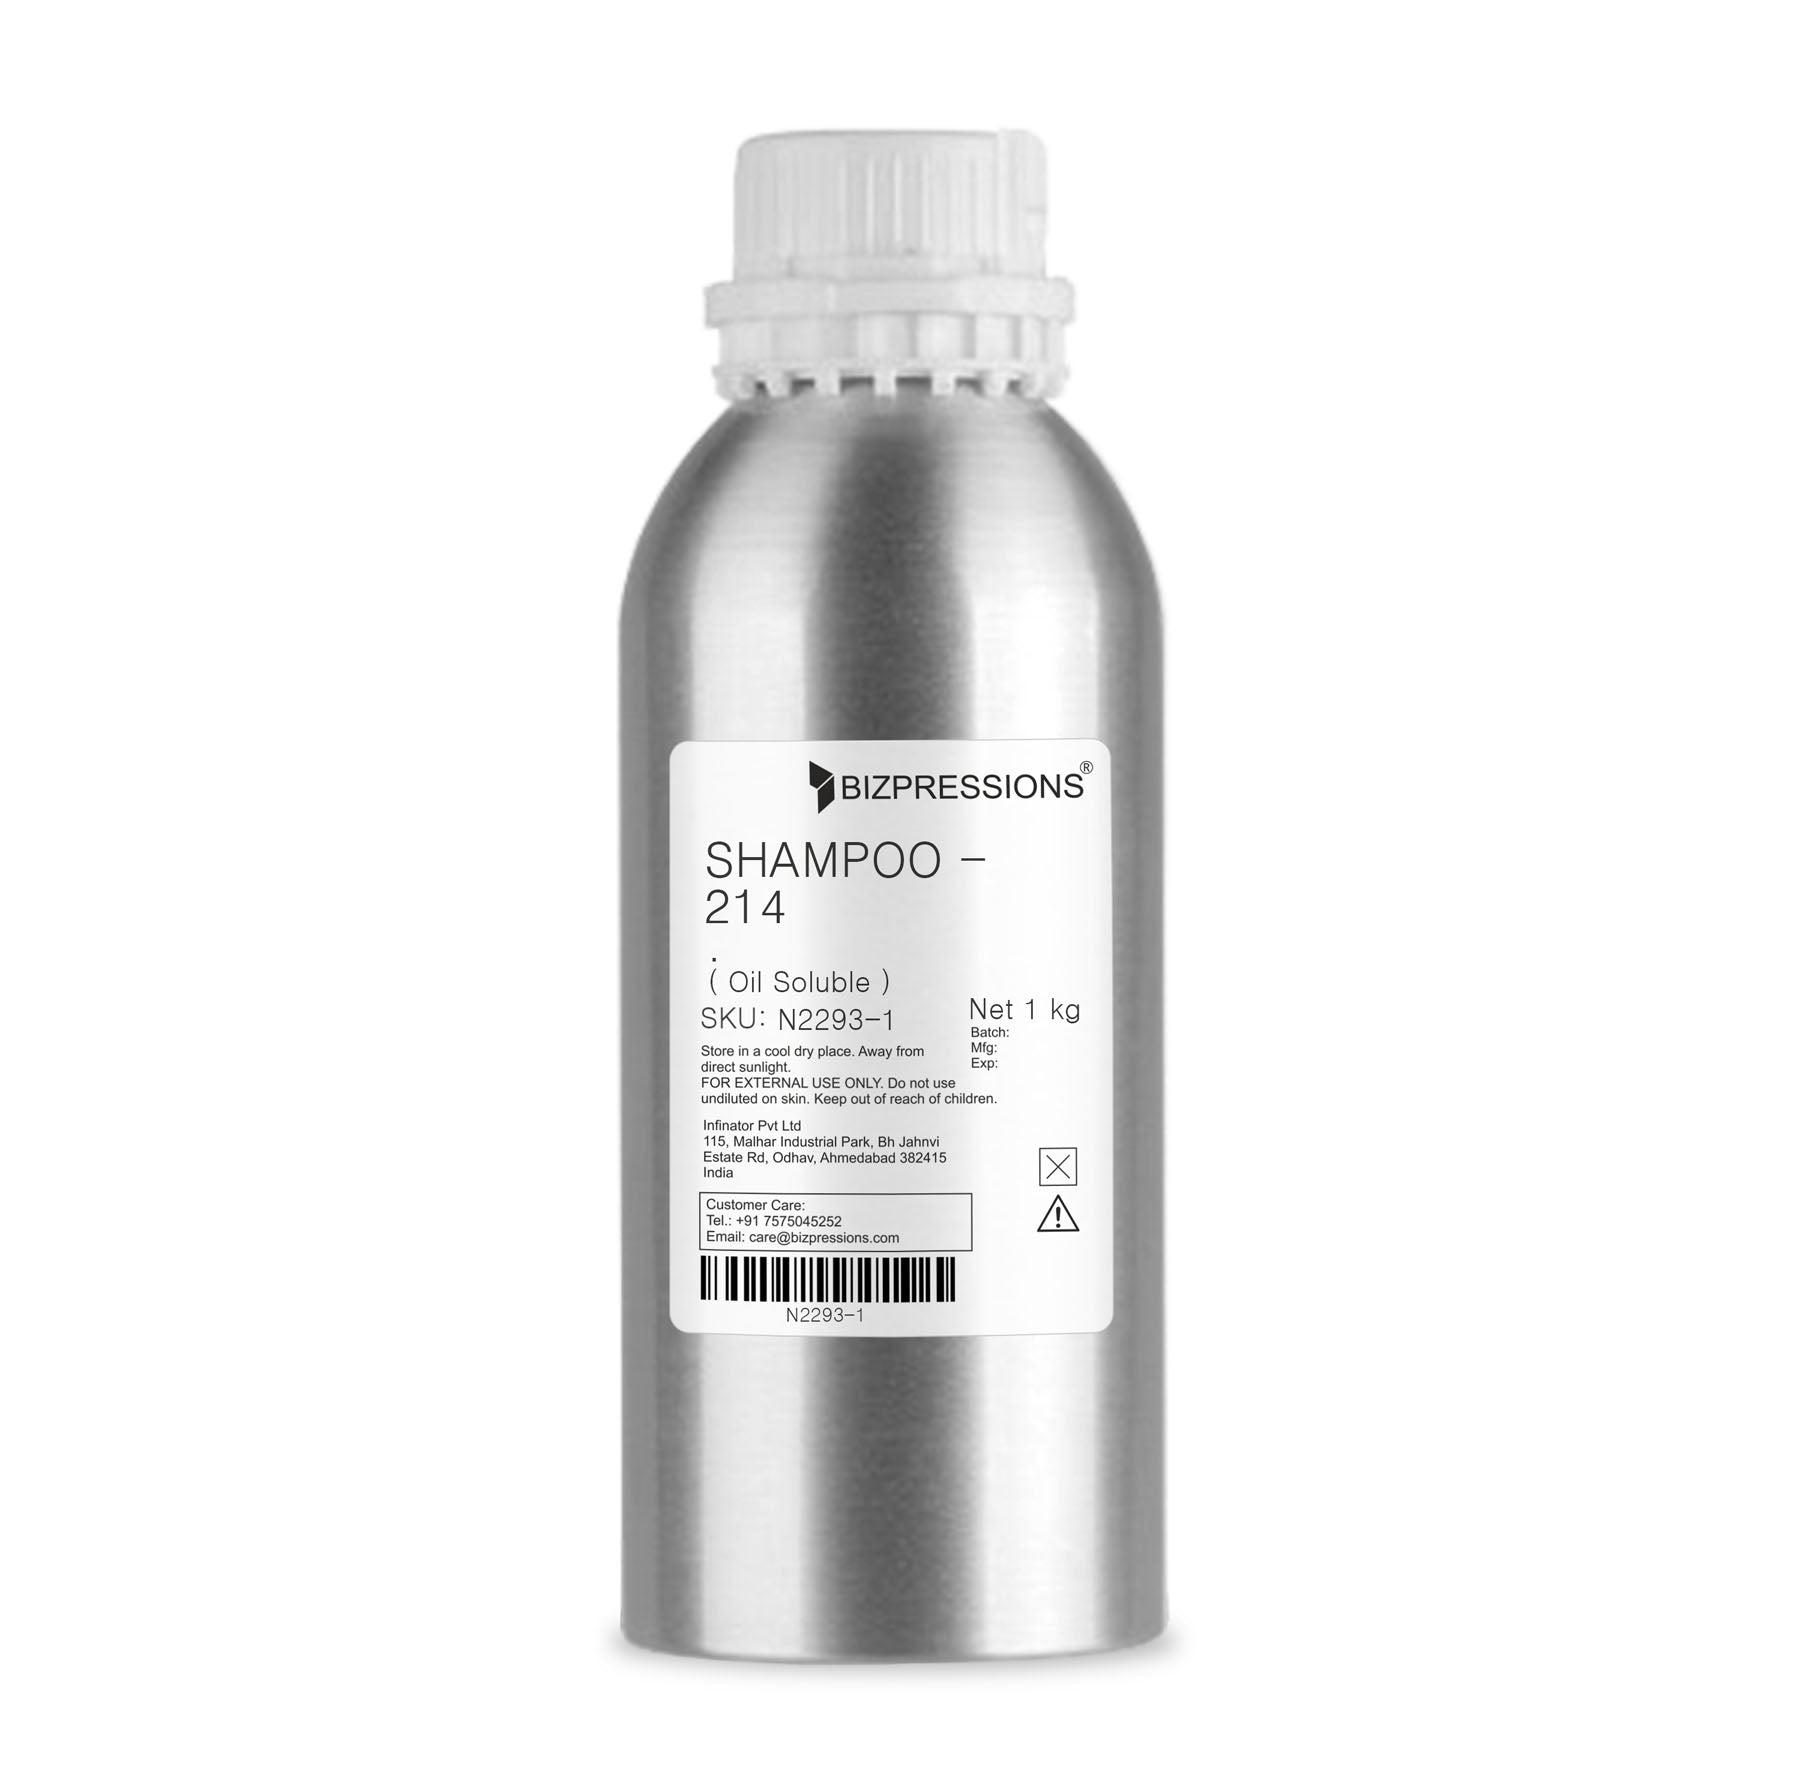 SHAMPOO - 214 - Fragrance ( Oil Soluble ) - 1 kg